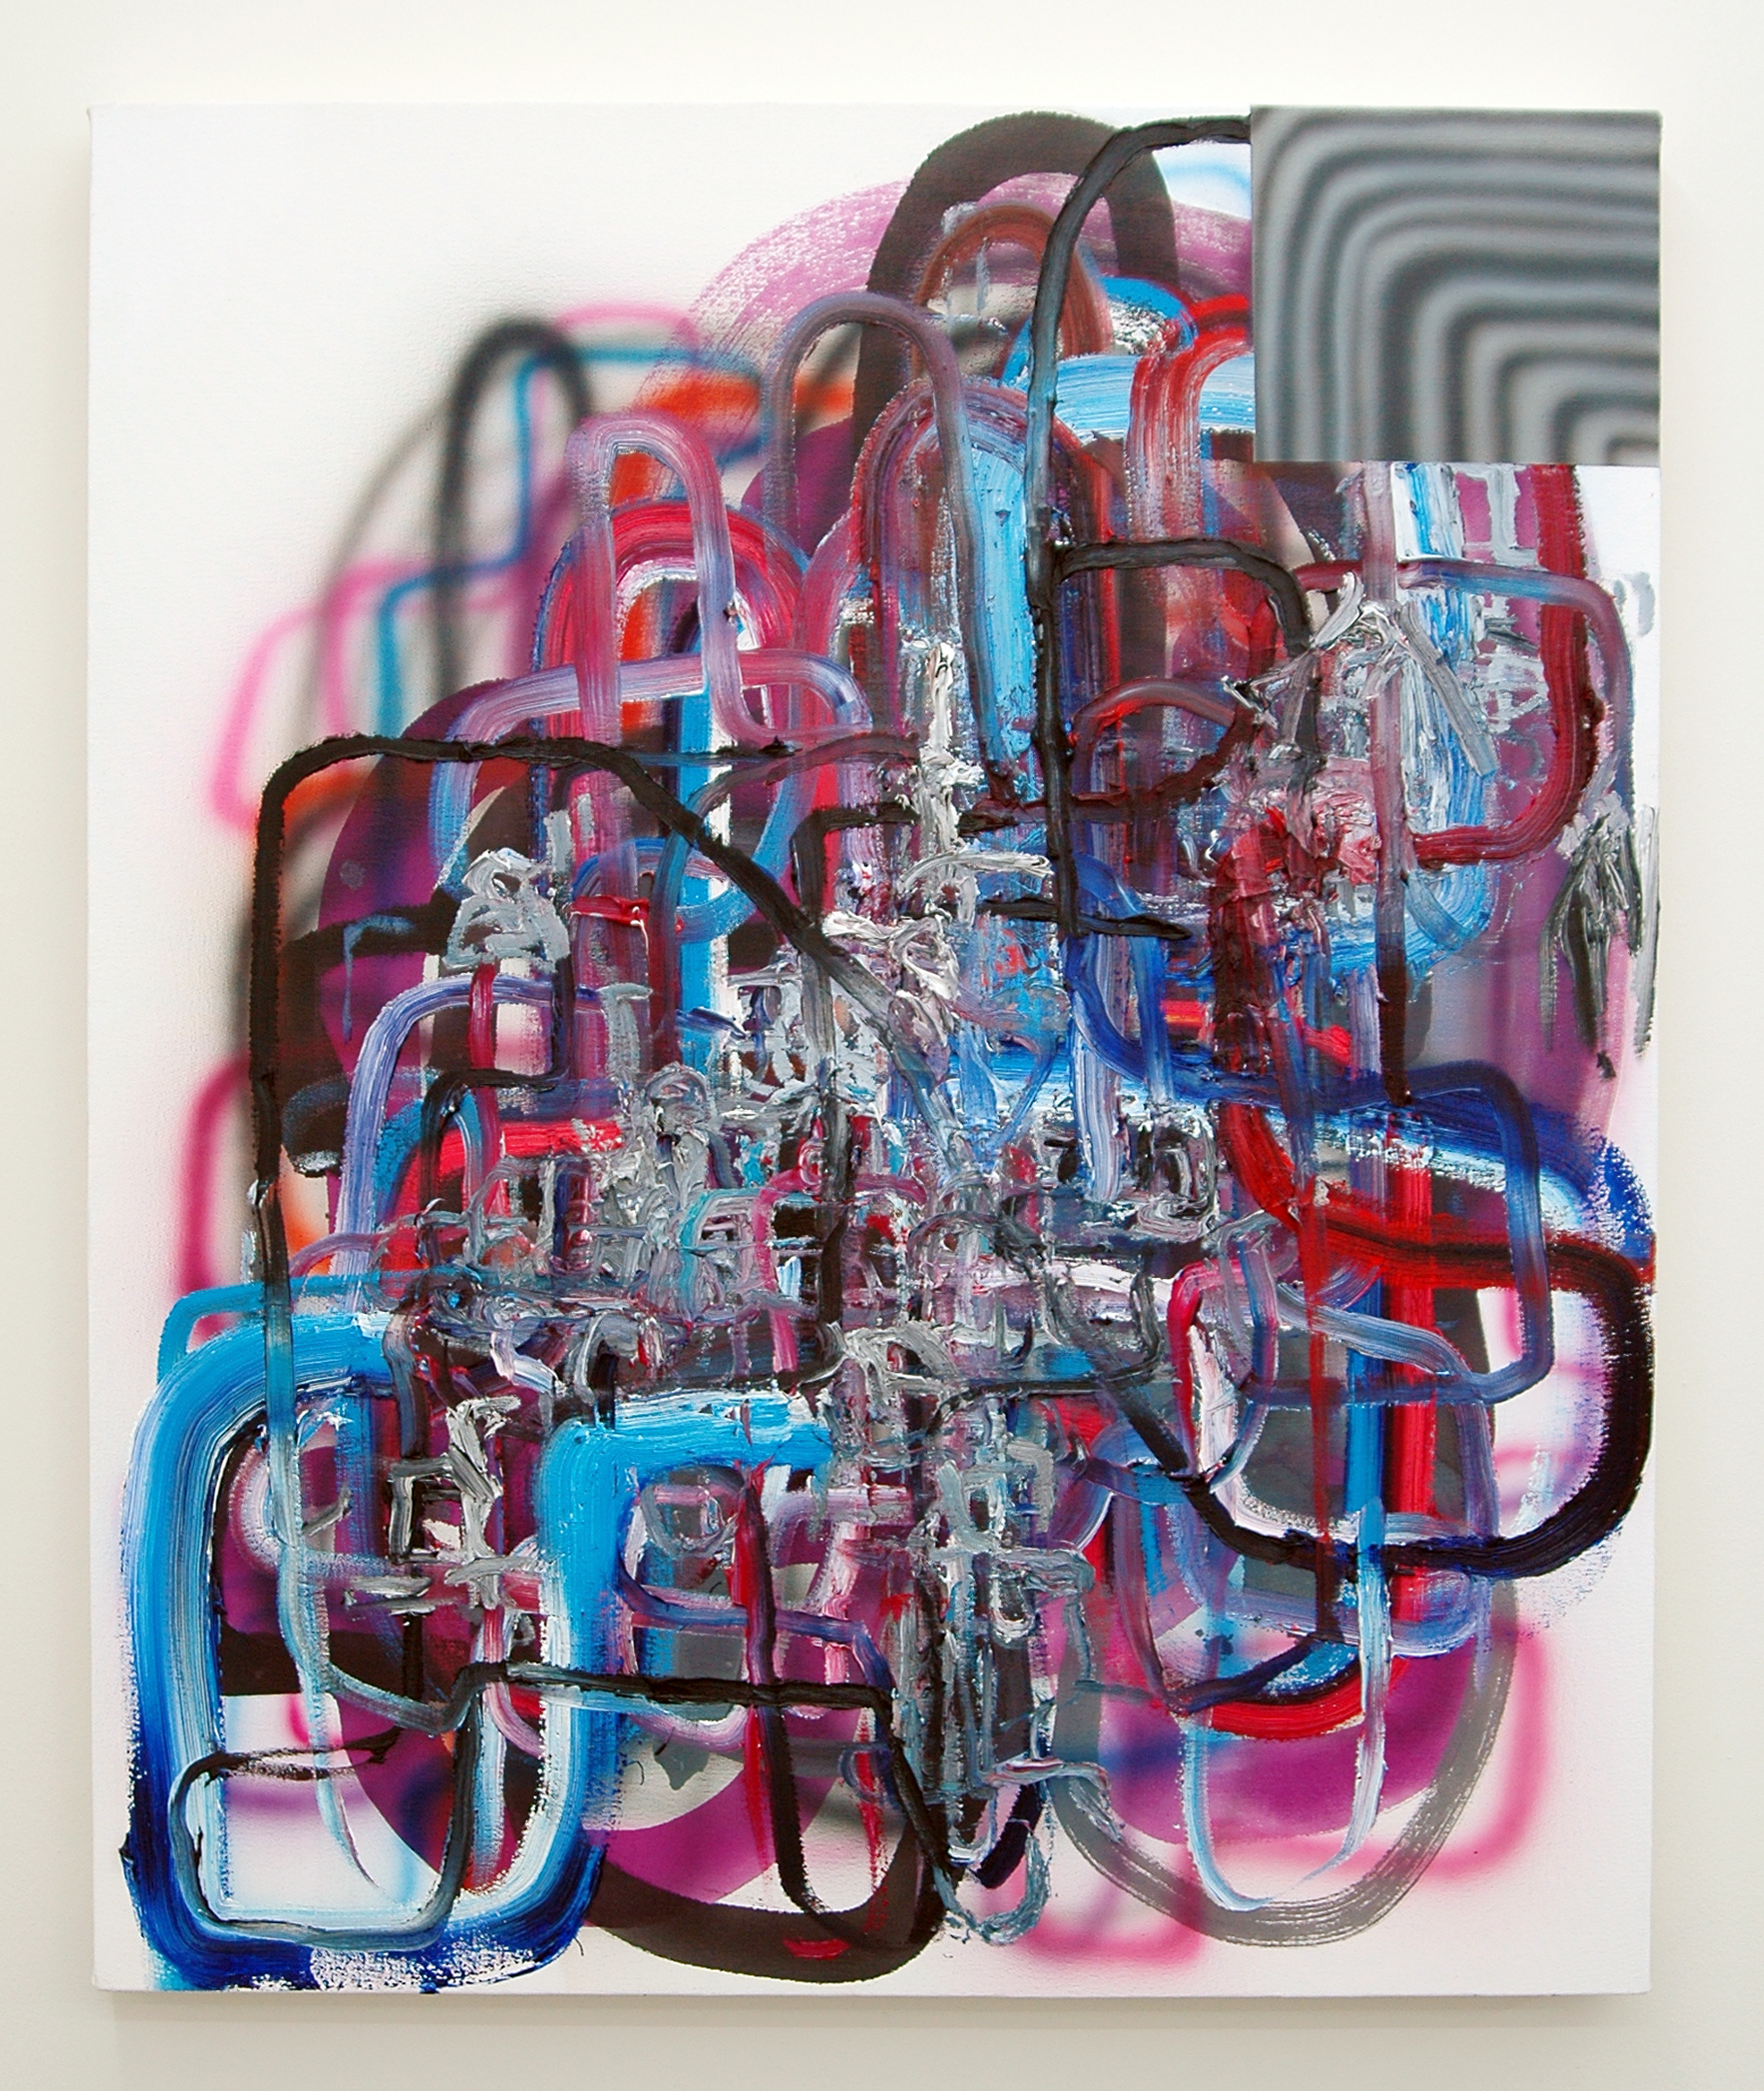   /SLASH/  Josh Podoll,&nbsp; Broken Foot,&nbsp; oil and acrylic on canvas, 36" x 30", 2014 